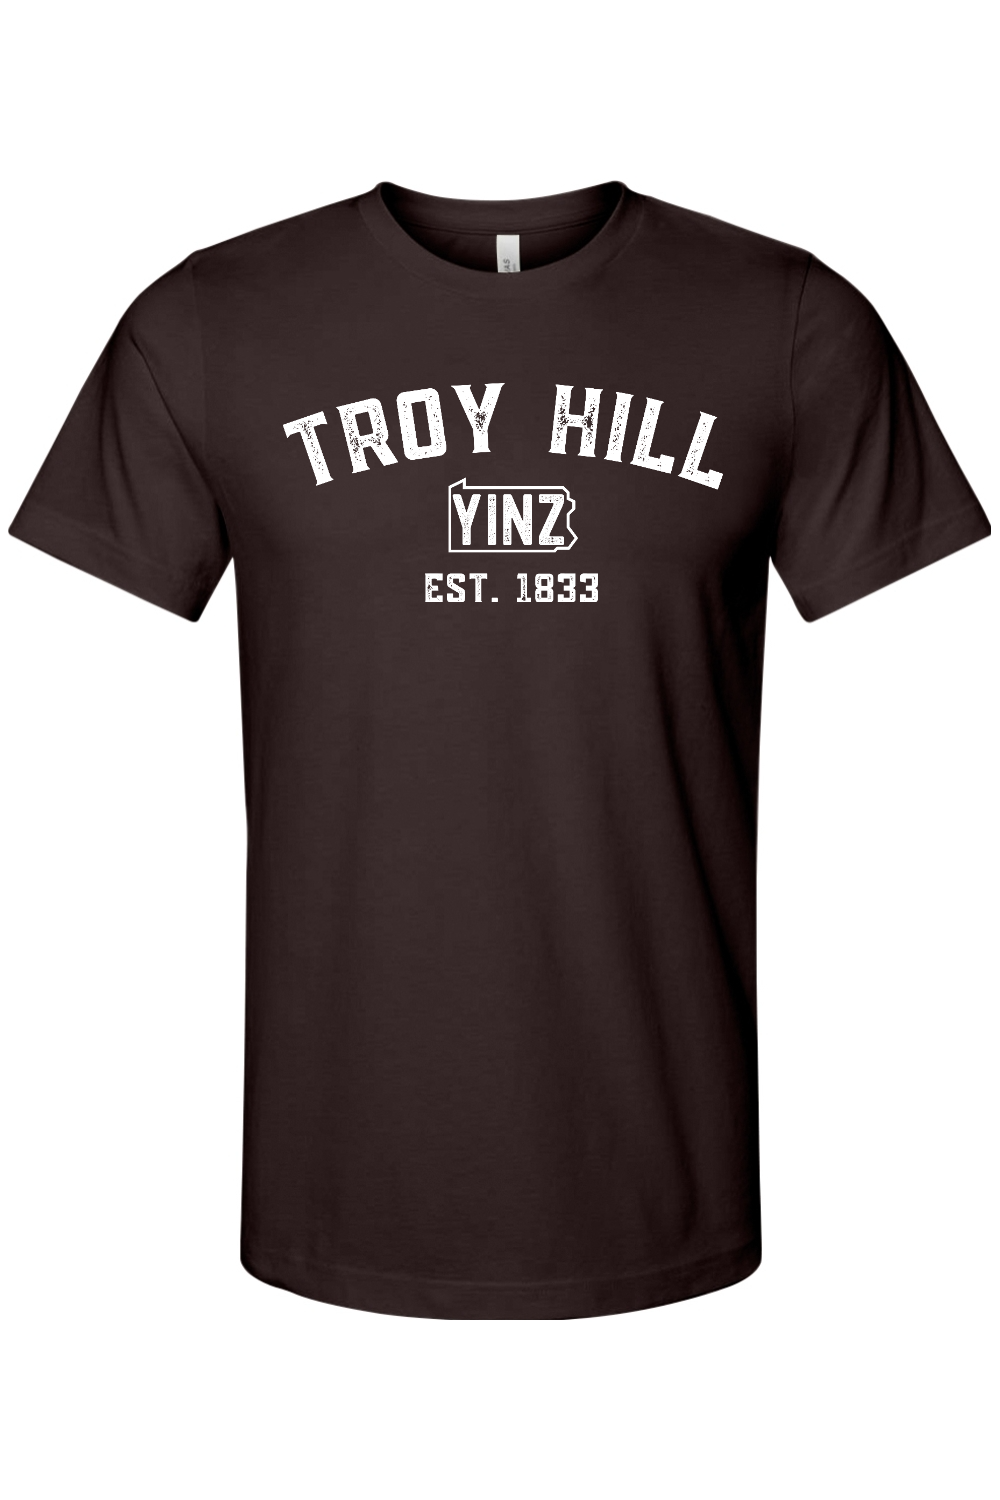 Troy Hill Yinzylvania - Yinzylvania